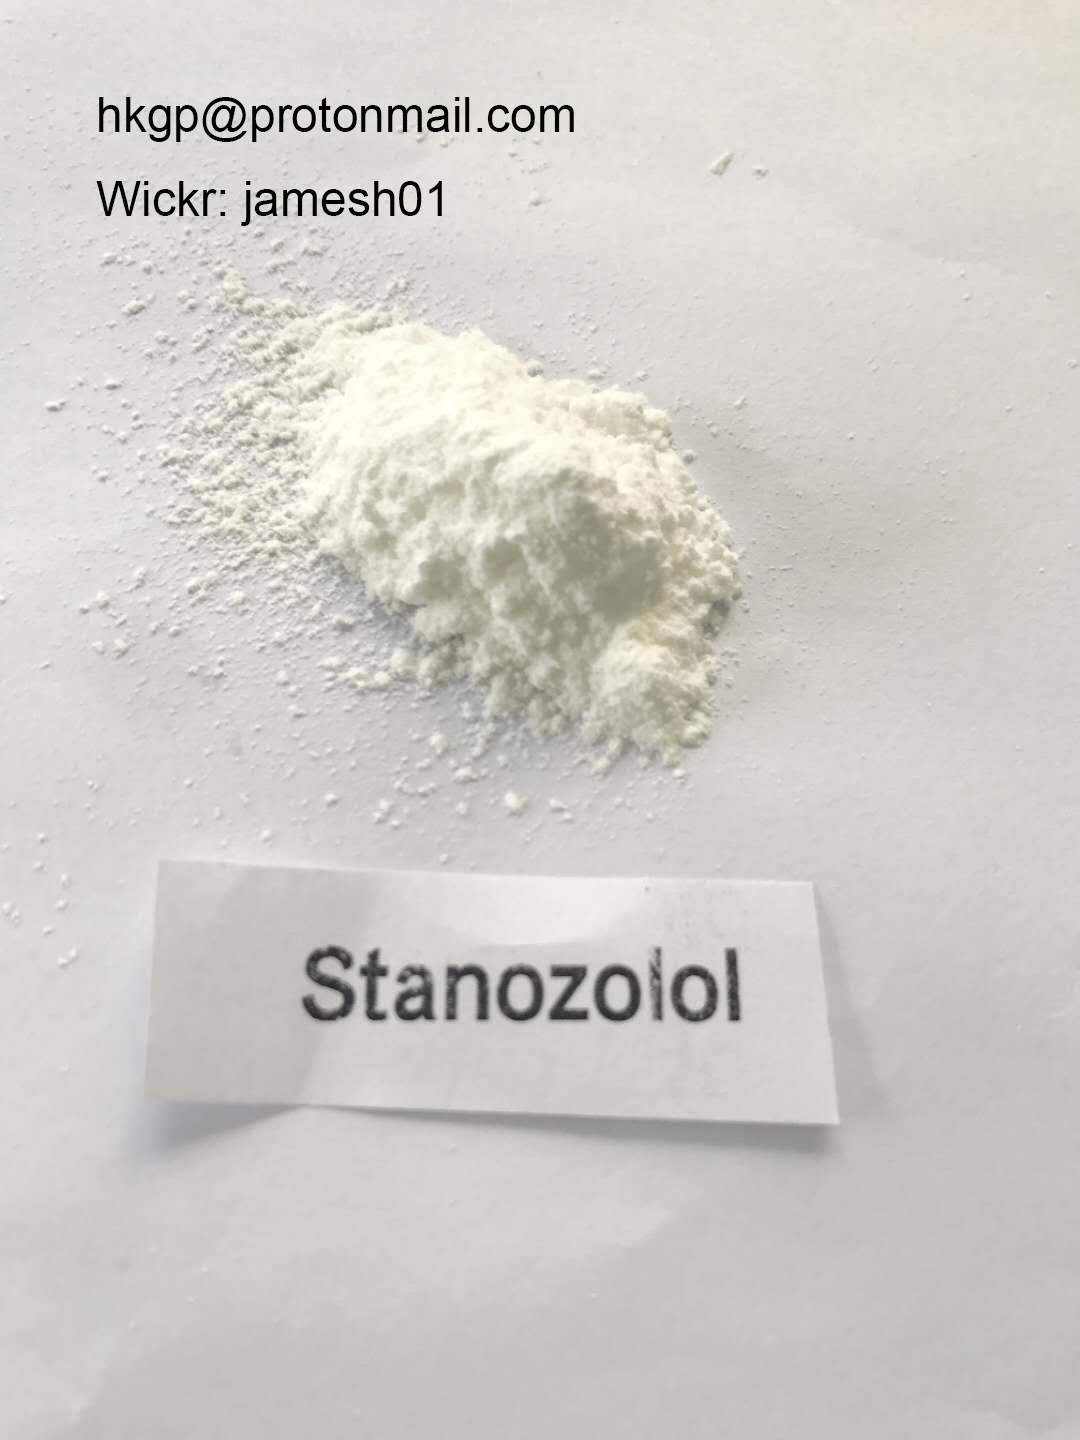 Pure Stanozolol (Winstrol) powder